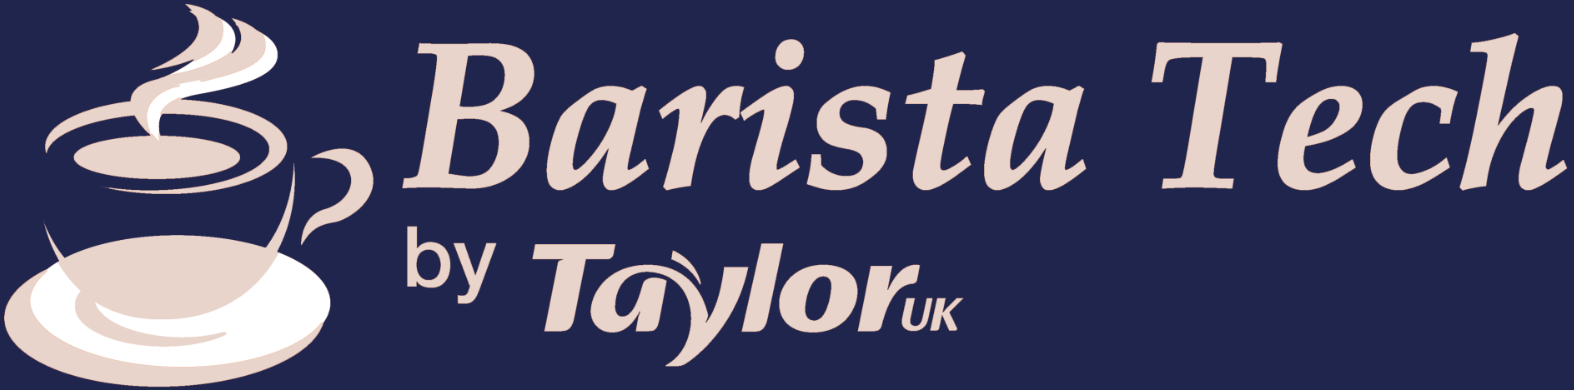 Barista Tech by Taylor UK Logo